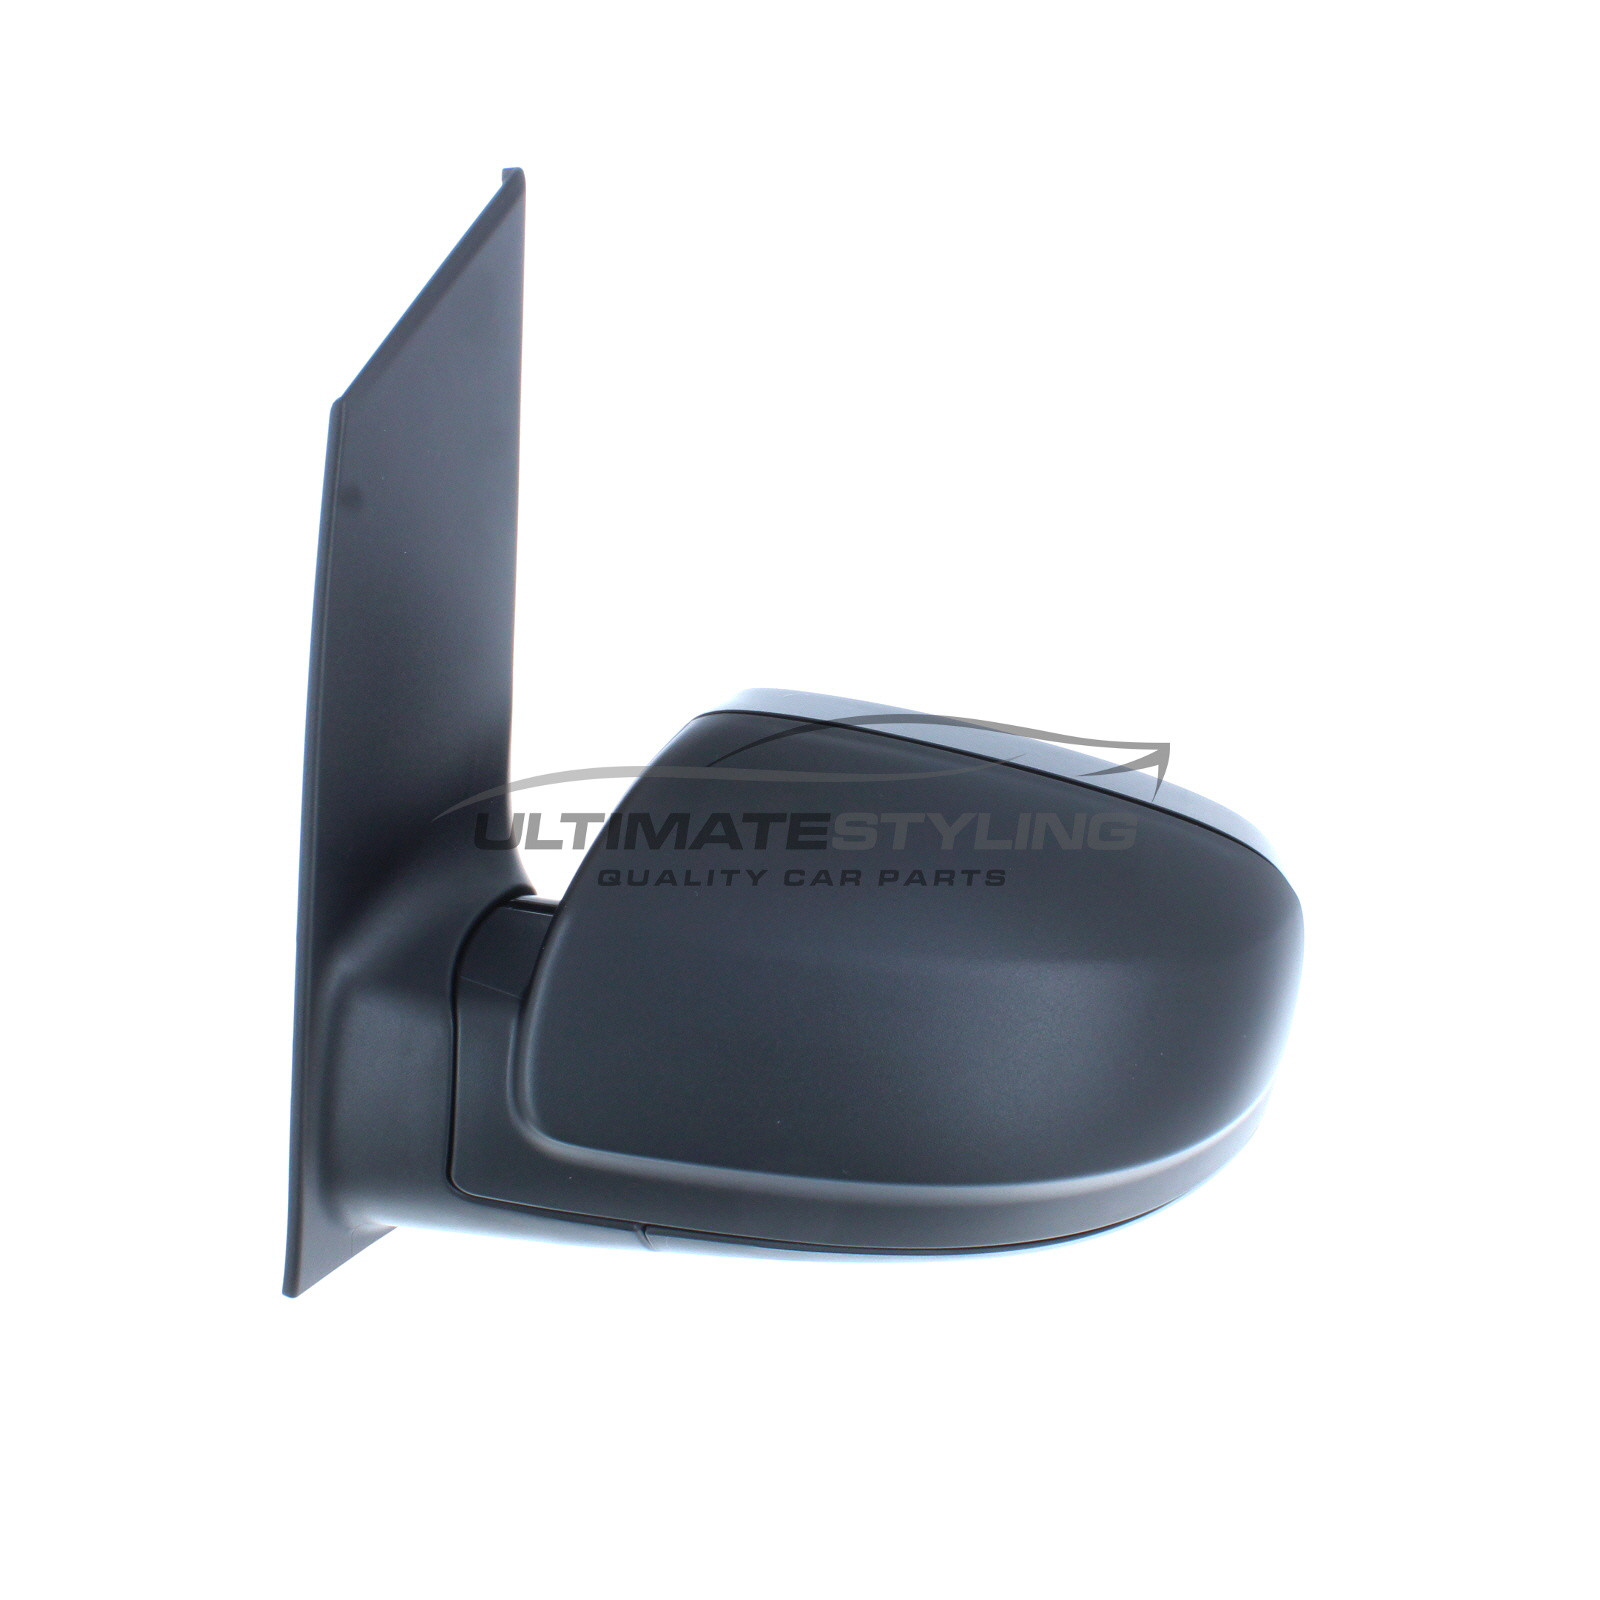 Mercedes Benz Vito Wing Mirror / Door Mirror - Passenger Side (LH) -  Electric adjustment - Heated Glass - Black